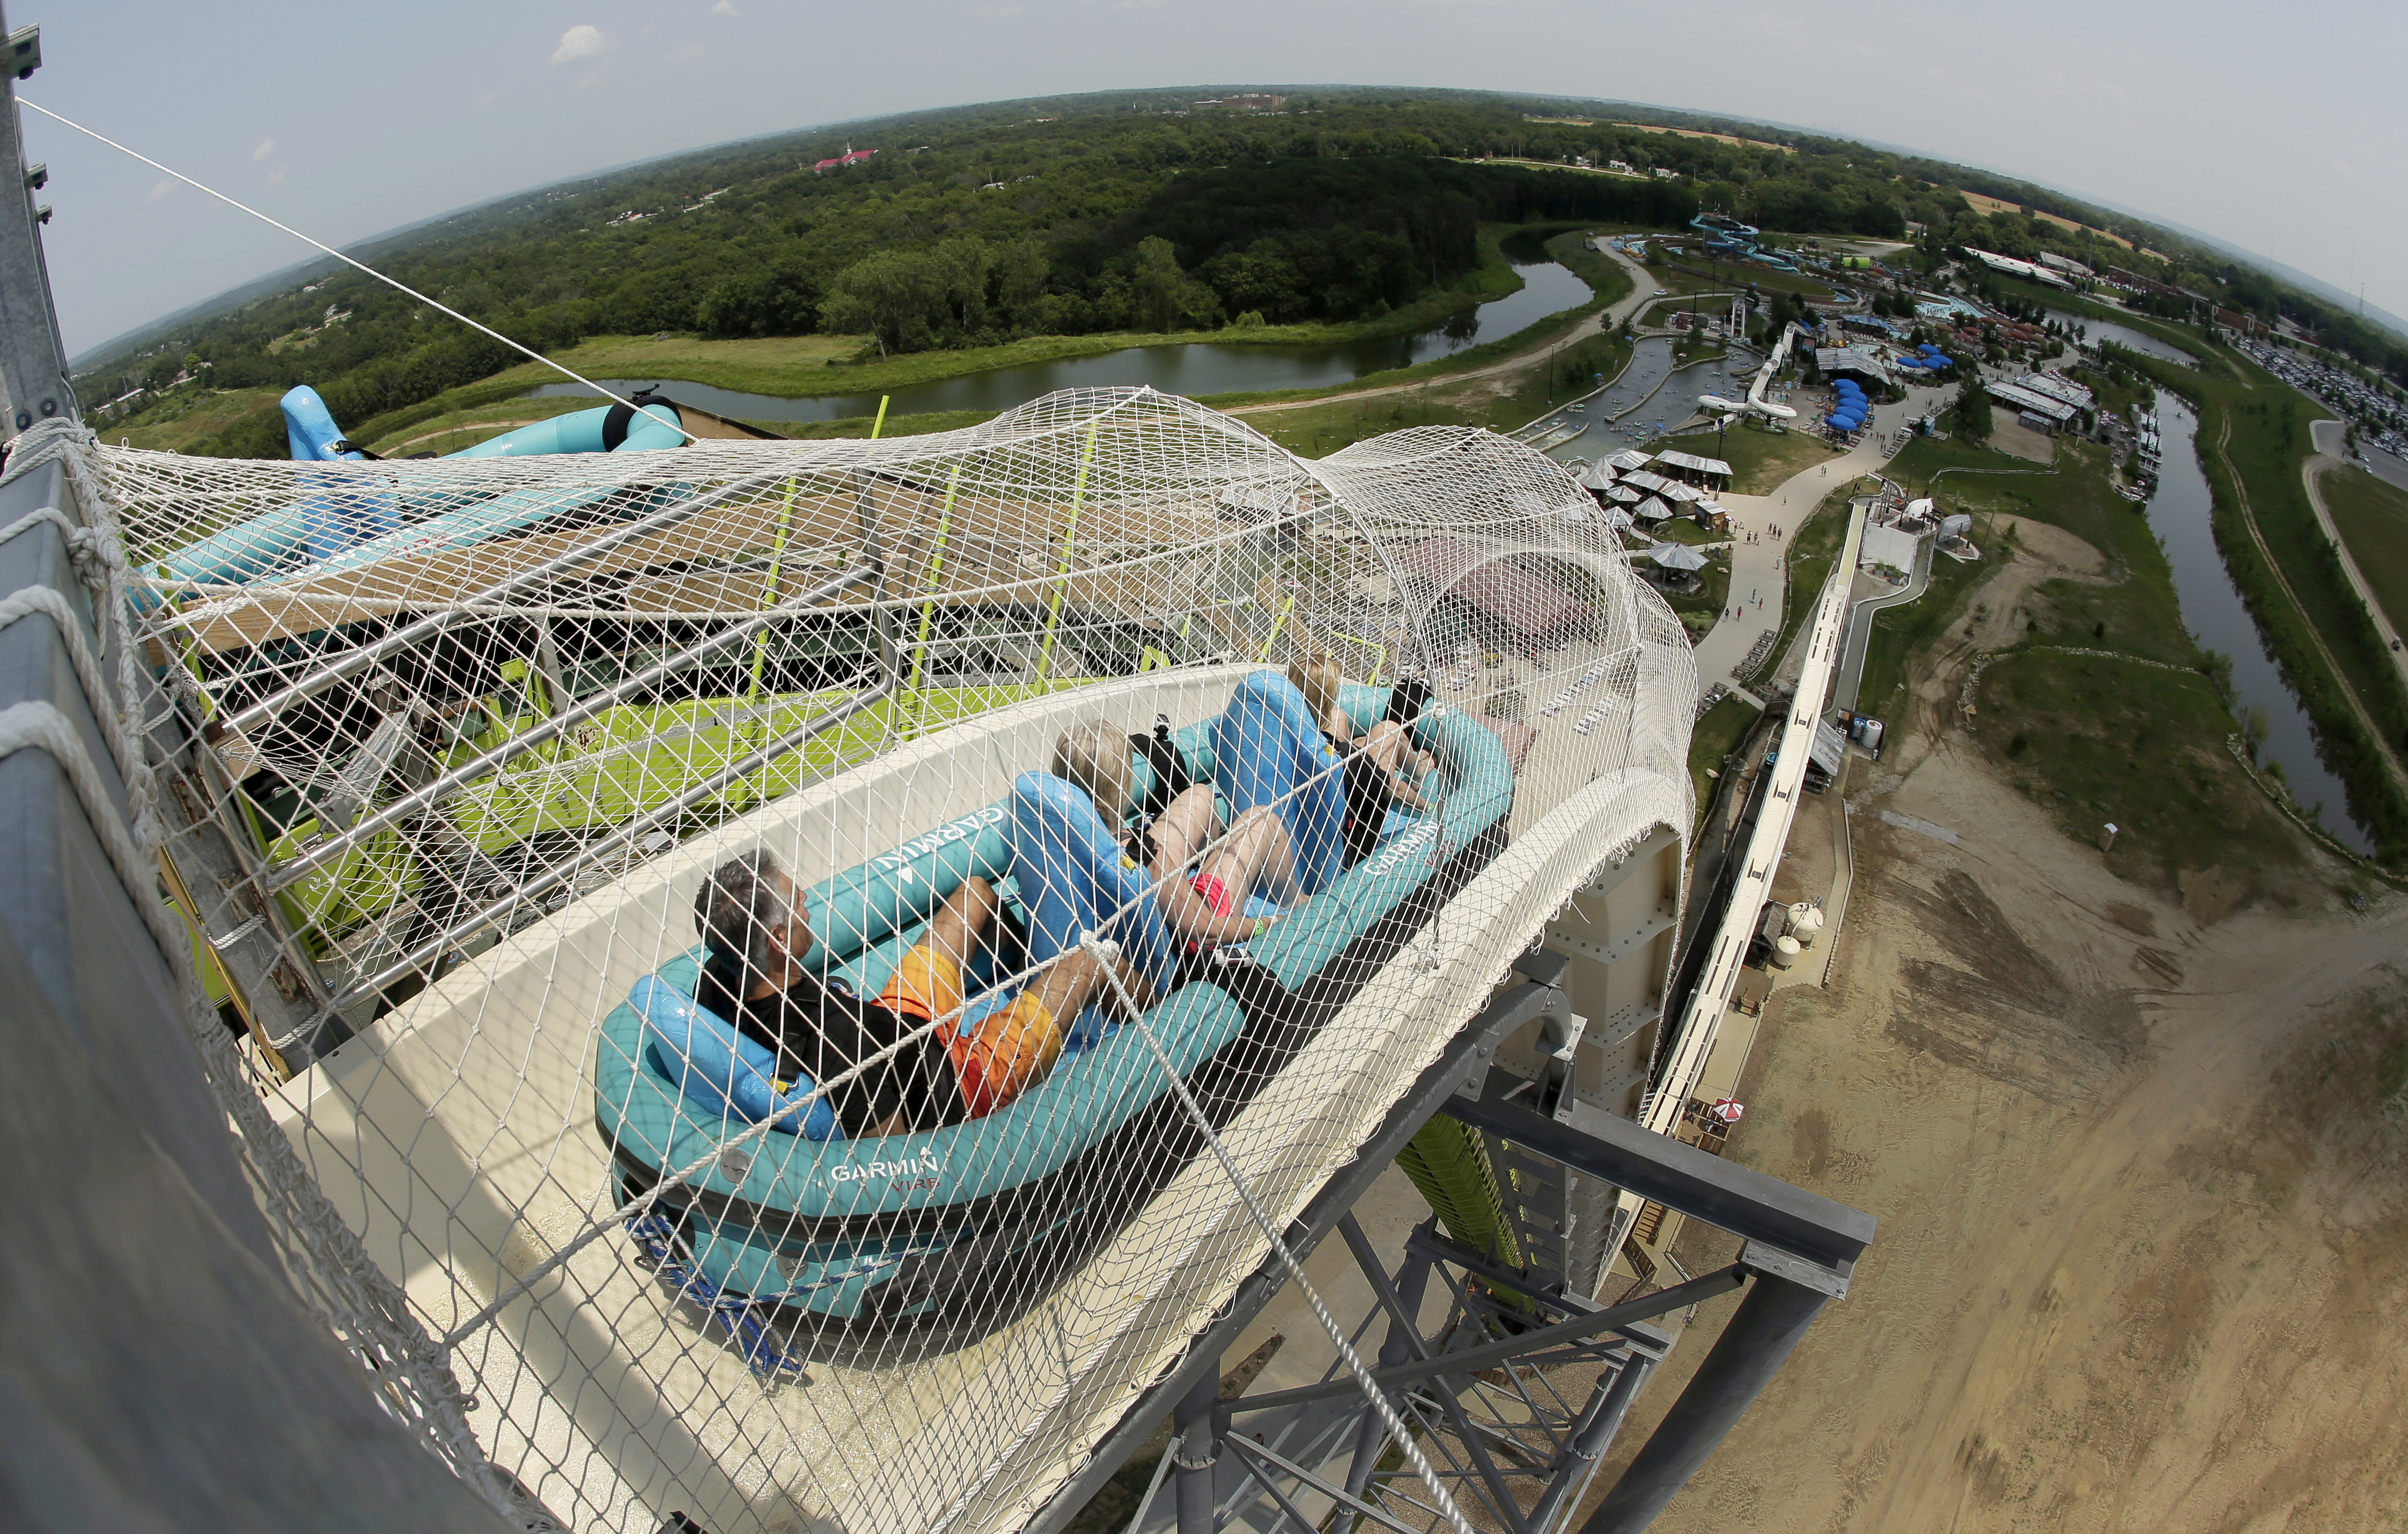 Riders go down the water slide called "Verruckt" at Schlitterbahn in Kansas City, Kans. in 2014. (Charlie Riedel—AP)